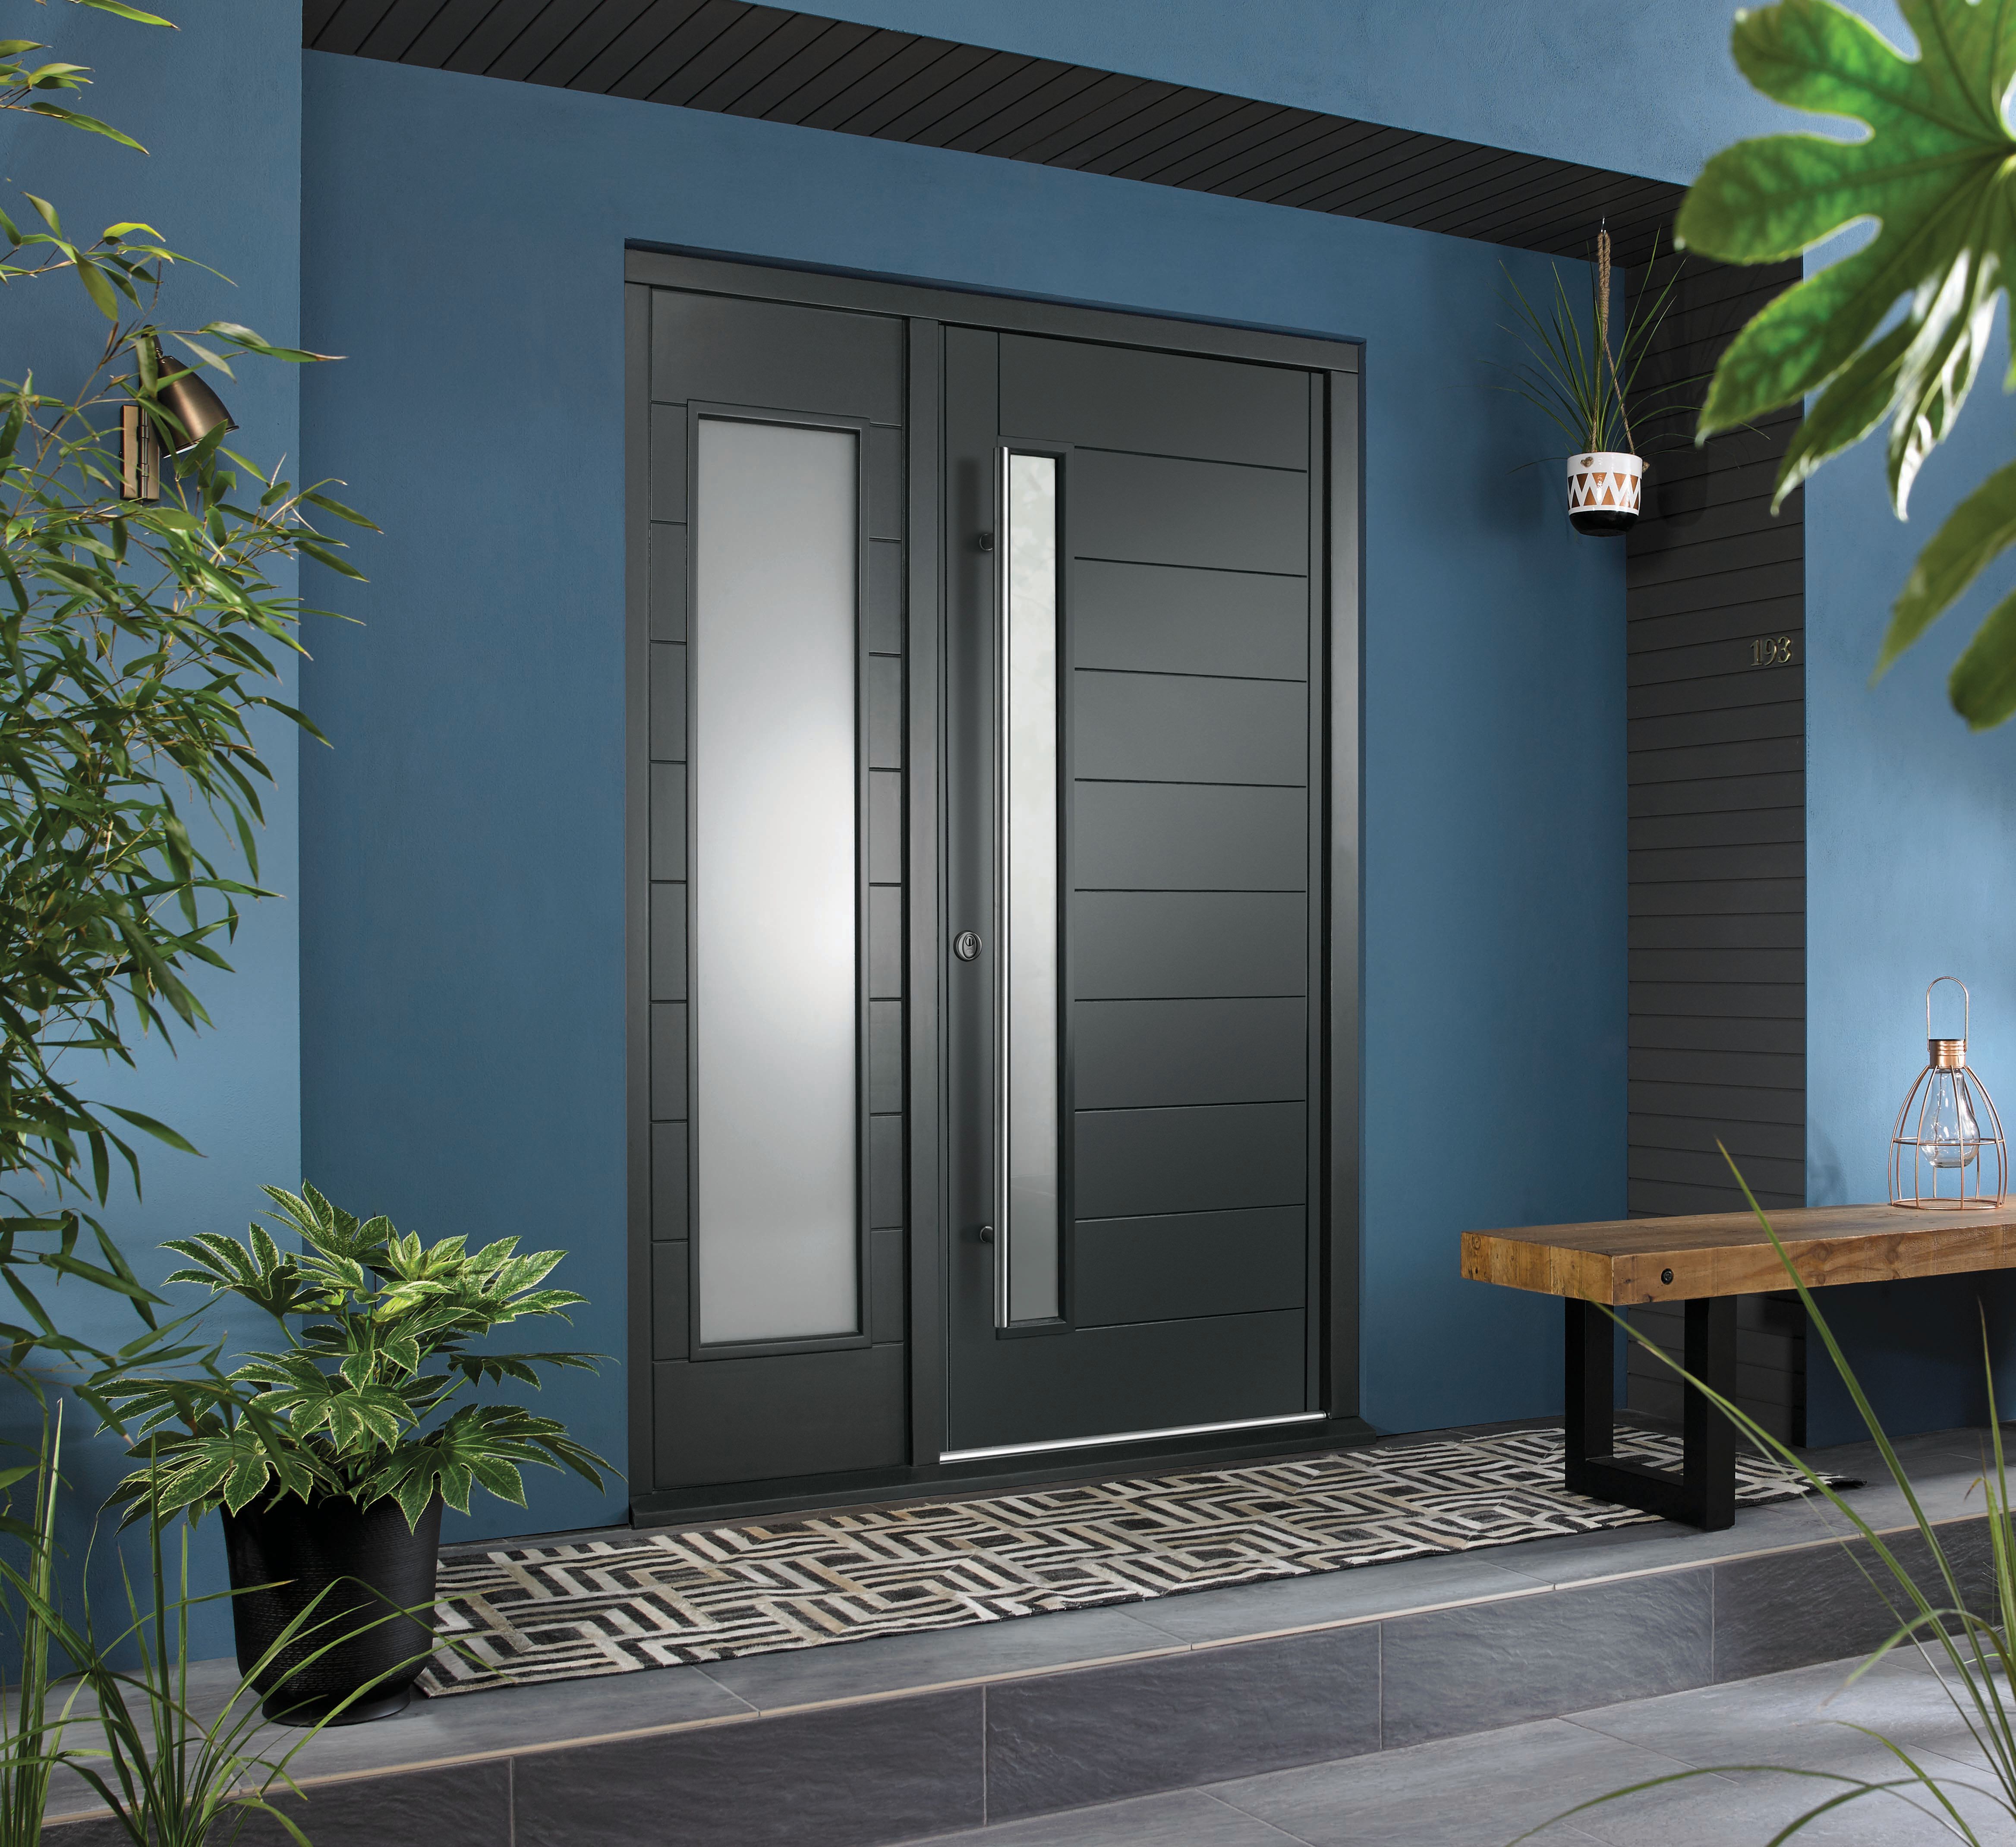 Image of JCI Ultimate Grey Door Frame with Single Side Light - 2079 x 1583mm